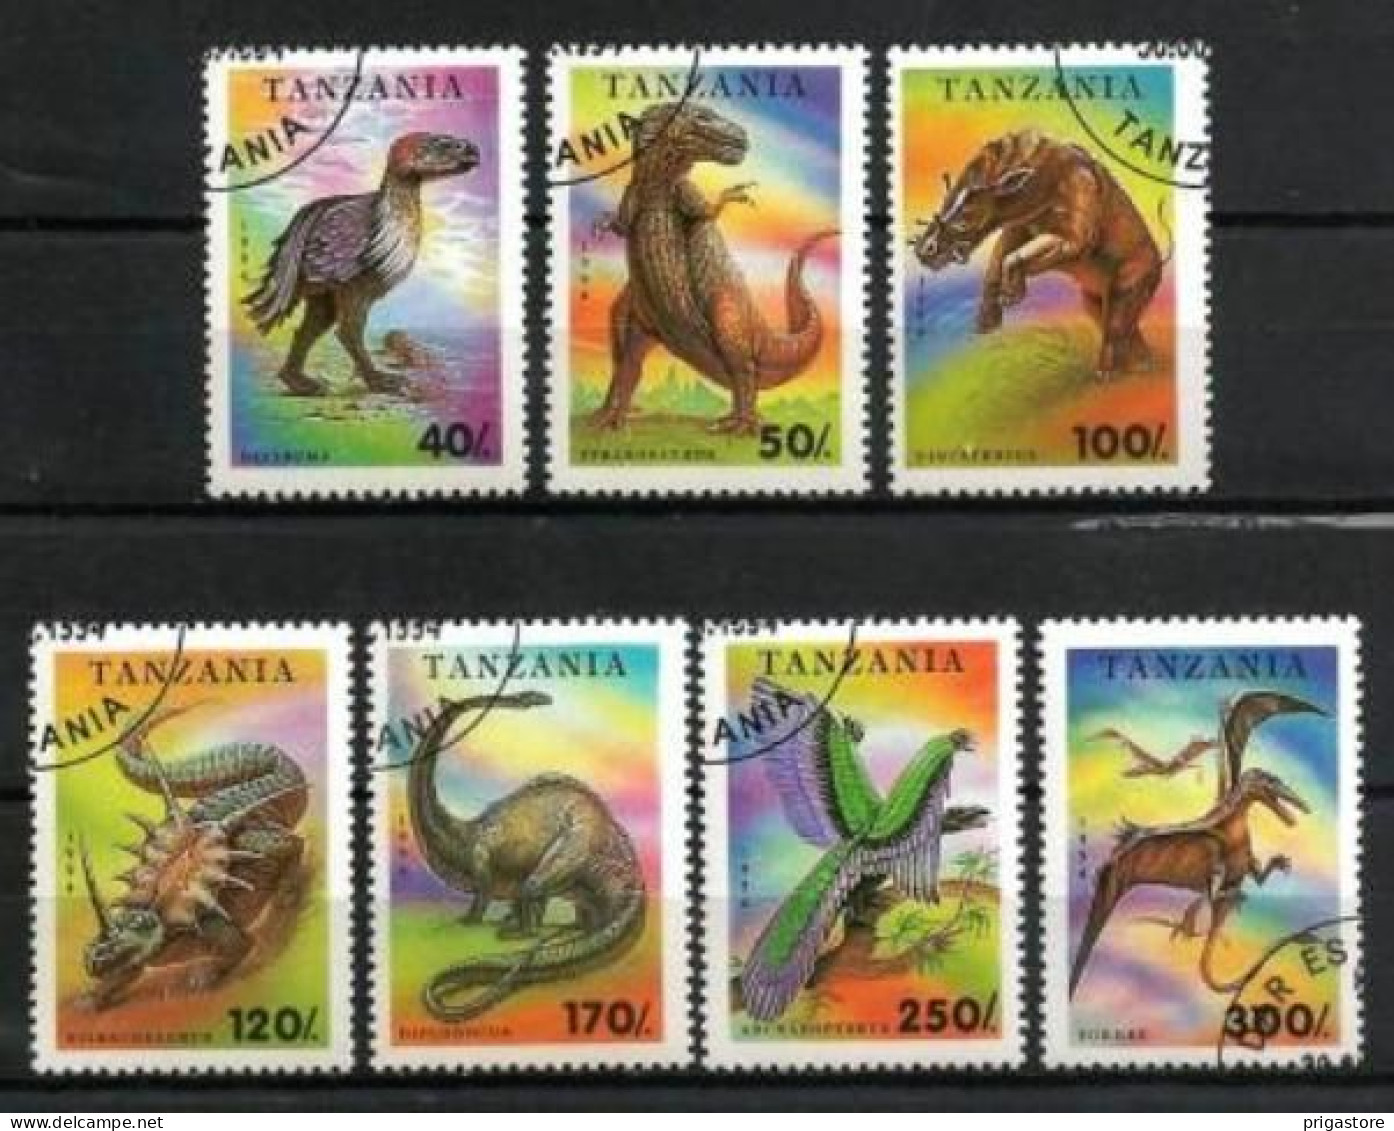 Tanzanie 1994 Animaux Préhistoriques (30) Yvert N° 1506 à 1512 Oblitéré Used - Tanzania (1964-...)